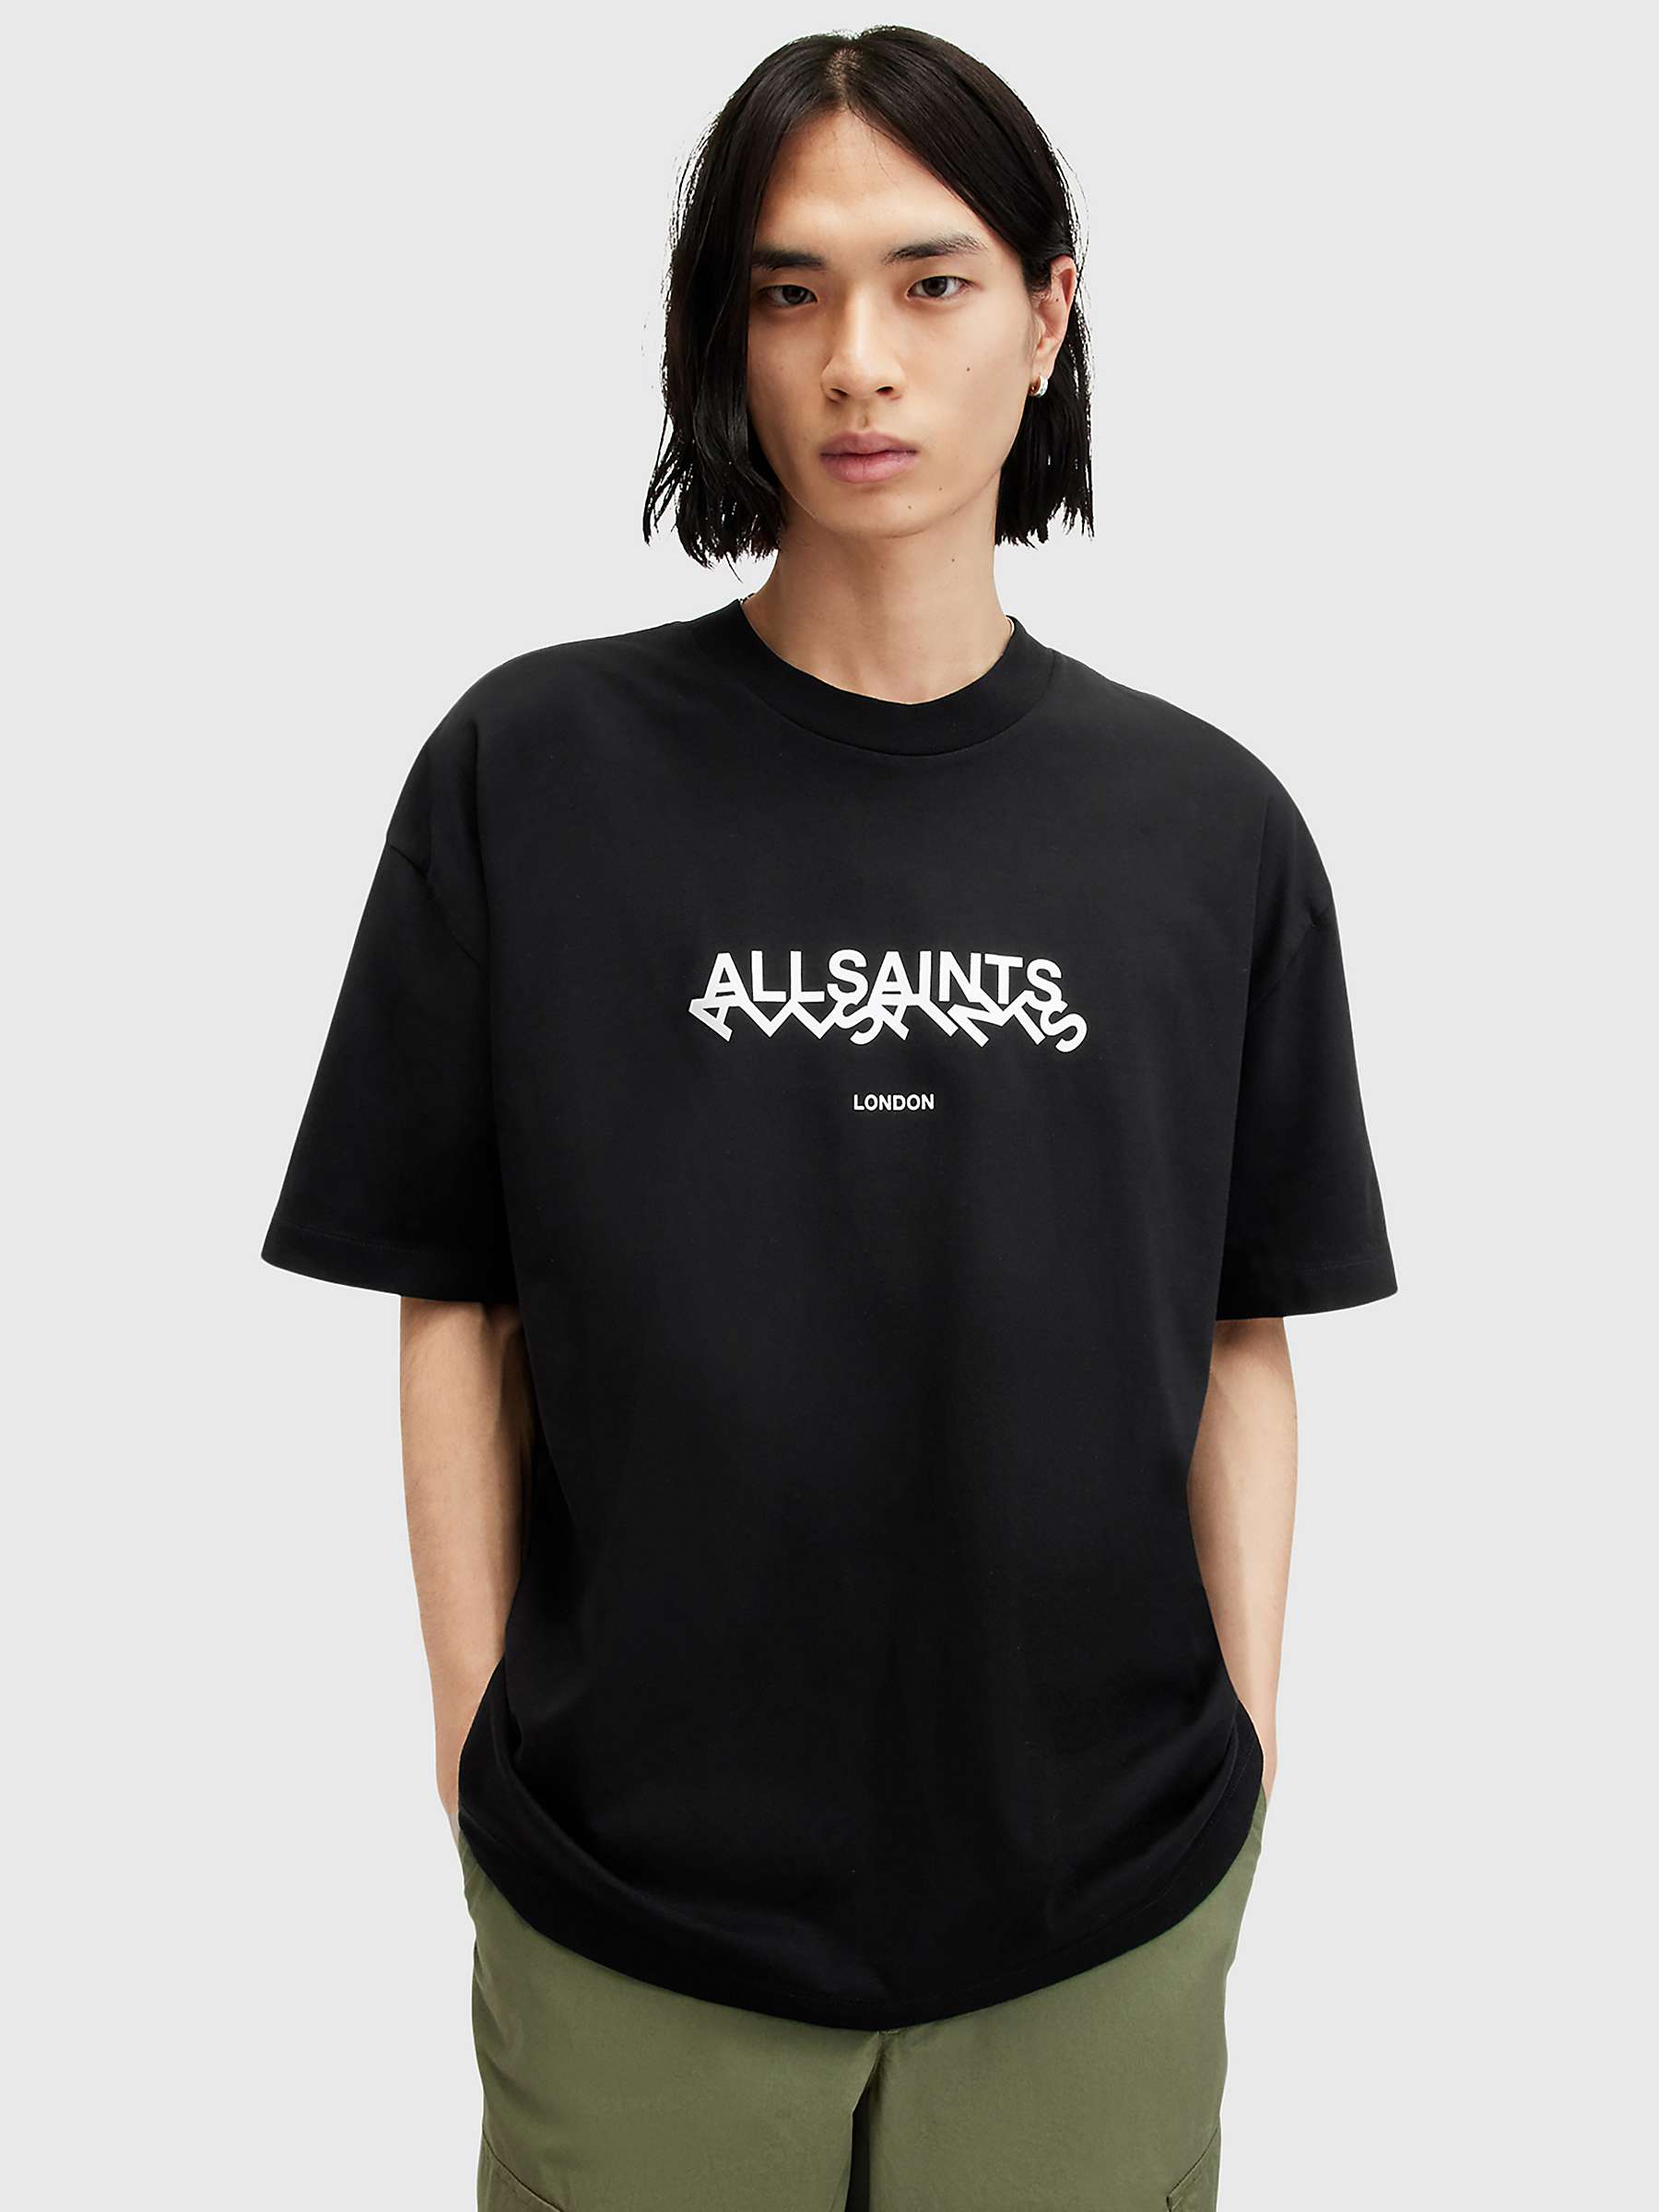 Buy AllSaints Slanted Short Sleeve Crew T-Shirt, Black Online at johnlewis.com